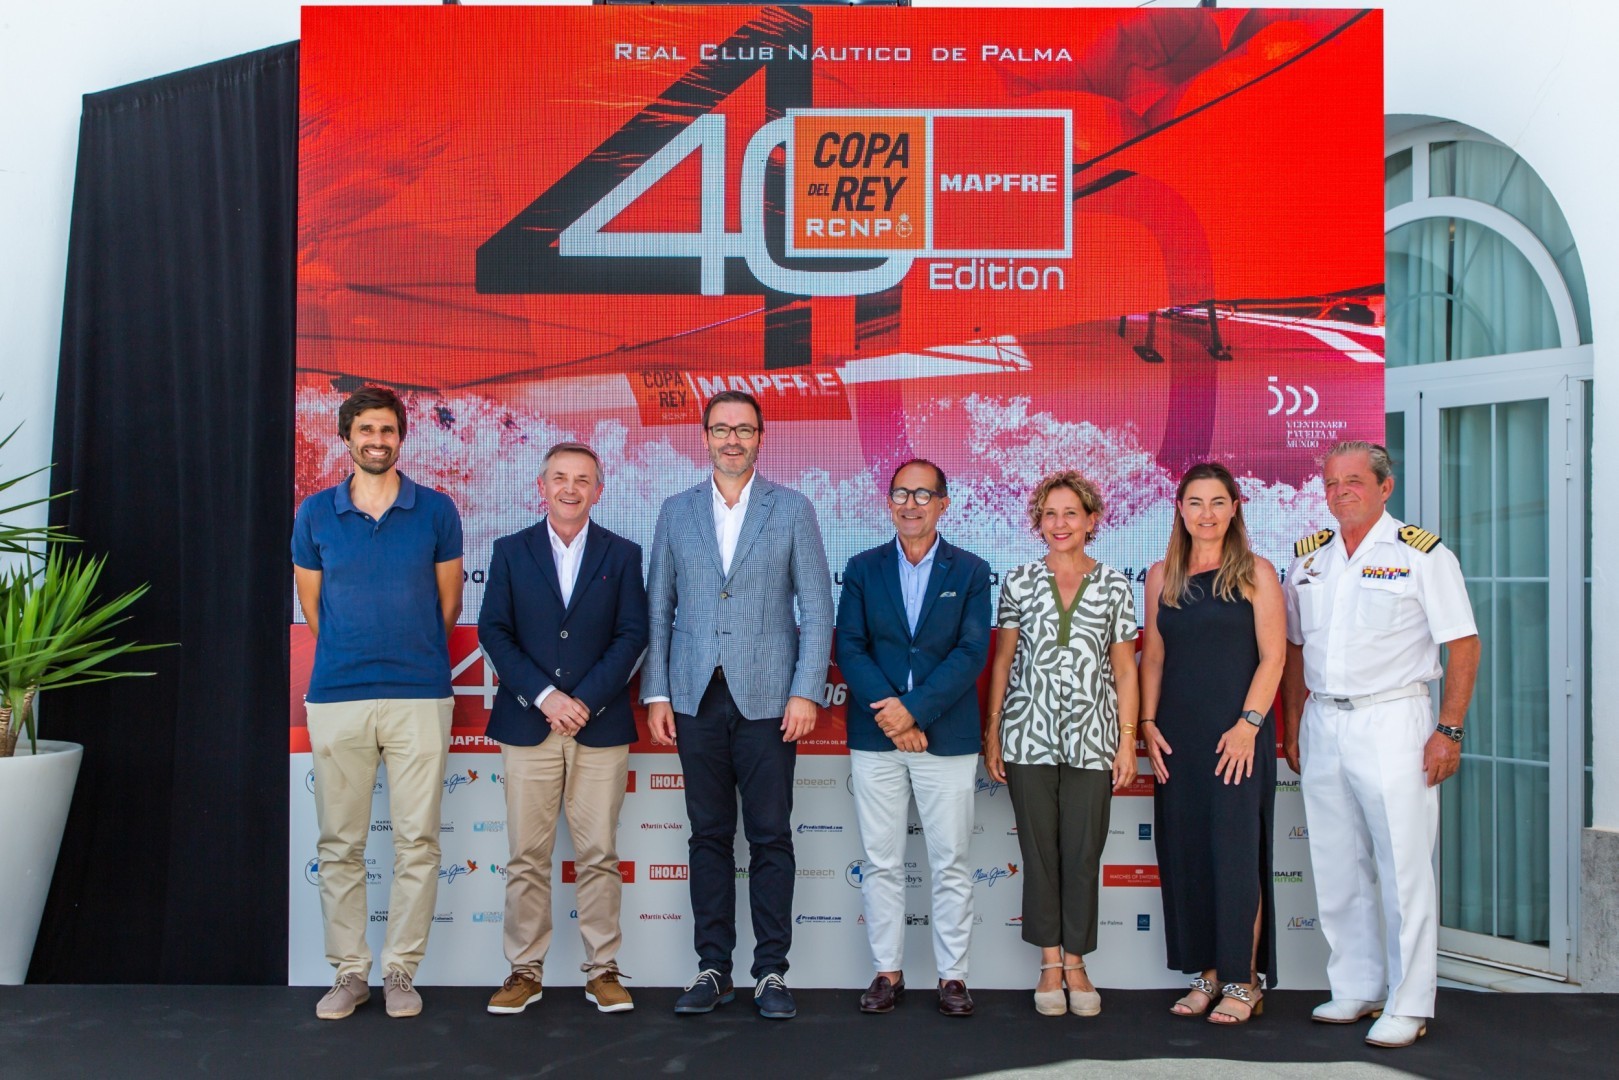 From left to right: Carles Gonyalons, Ricardo Garzó, José Hila, Emerico Fuster, Aina Calvo, Catalina Darder & Dámaso Berenguer